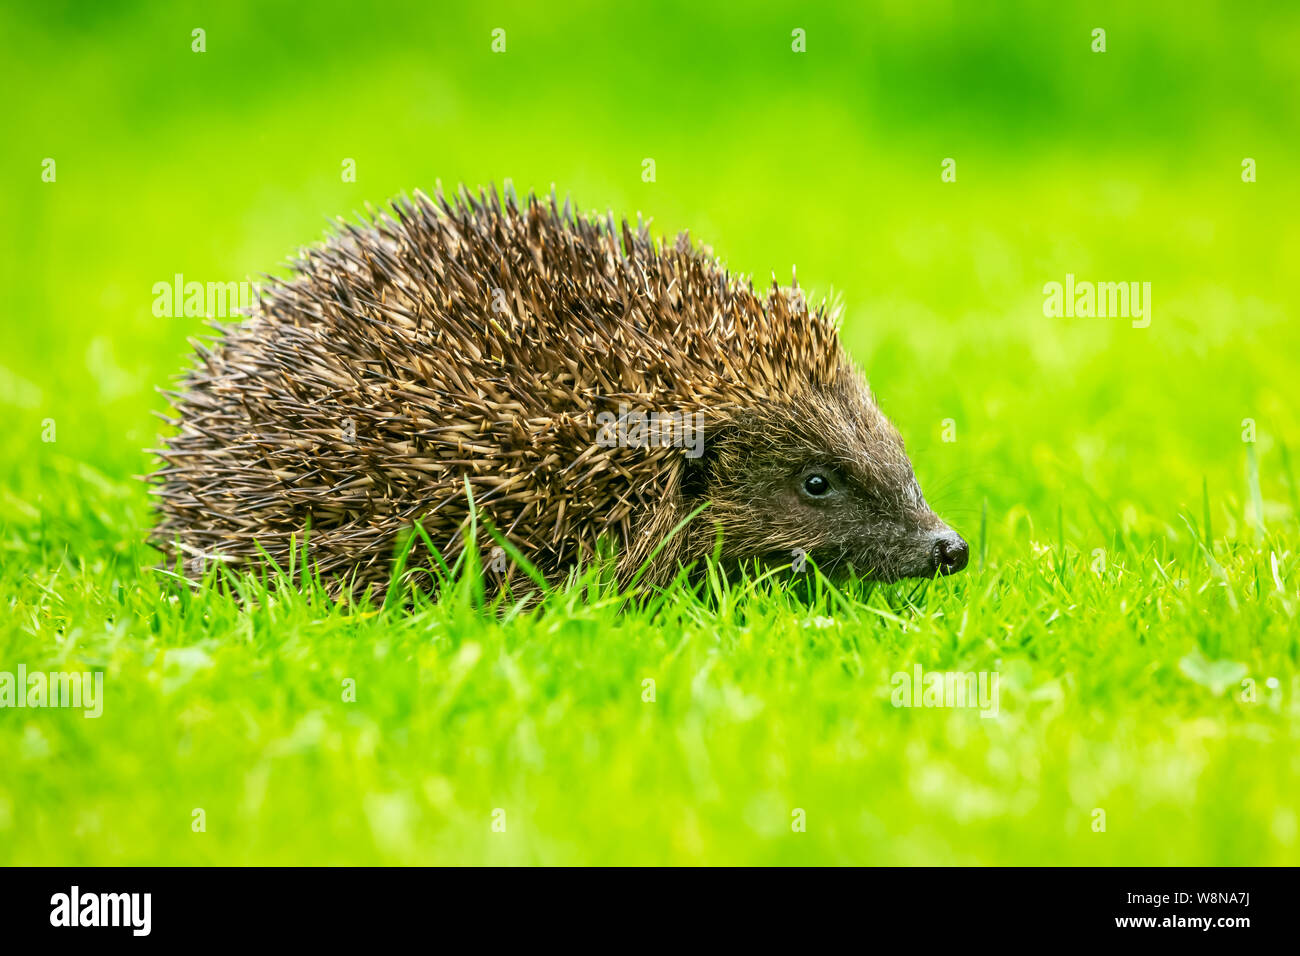 Hedgehog, (Scientific name:  Erinaceus europaeus) Wild, native, European hedgehog  in natural garden habitat with green grass lawn.  Facing right. Stock Photo